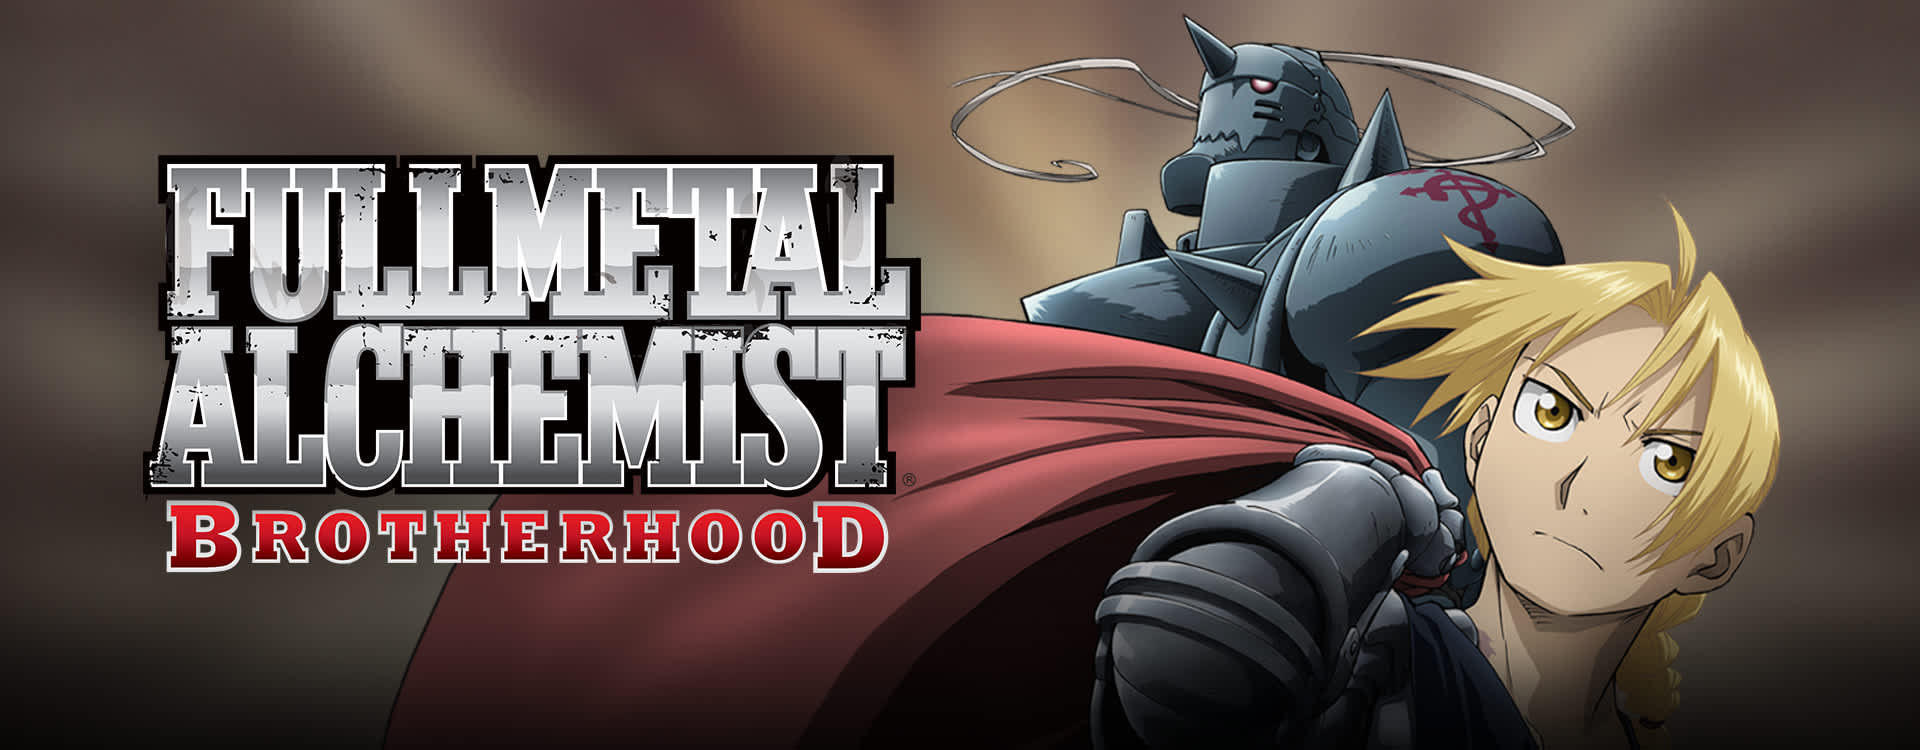 Fullmetal Alchemist: Brotherhood Streaming Launch Date Scheduled